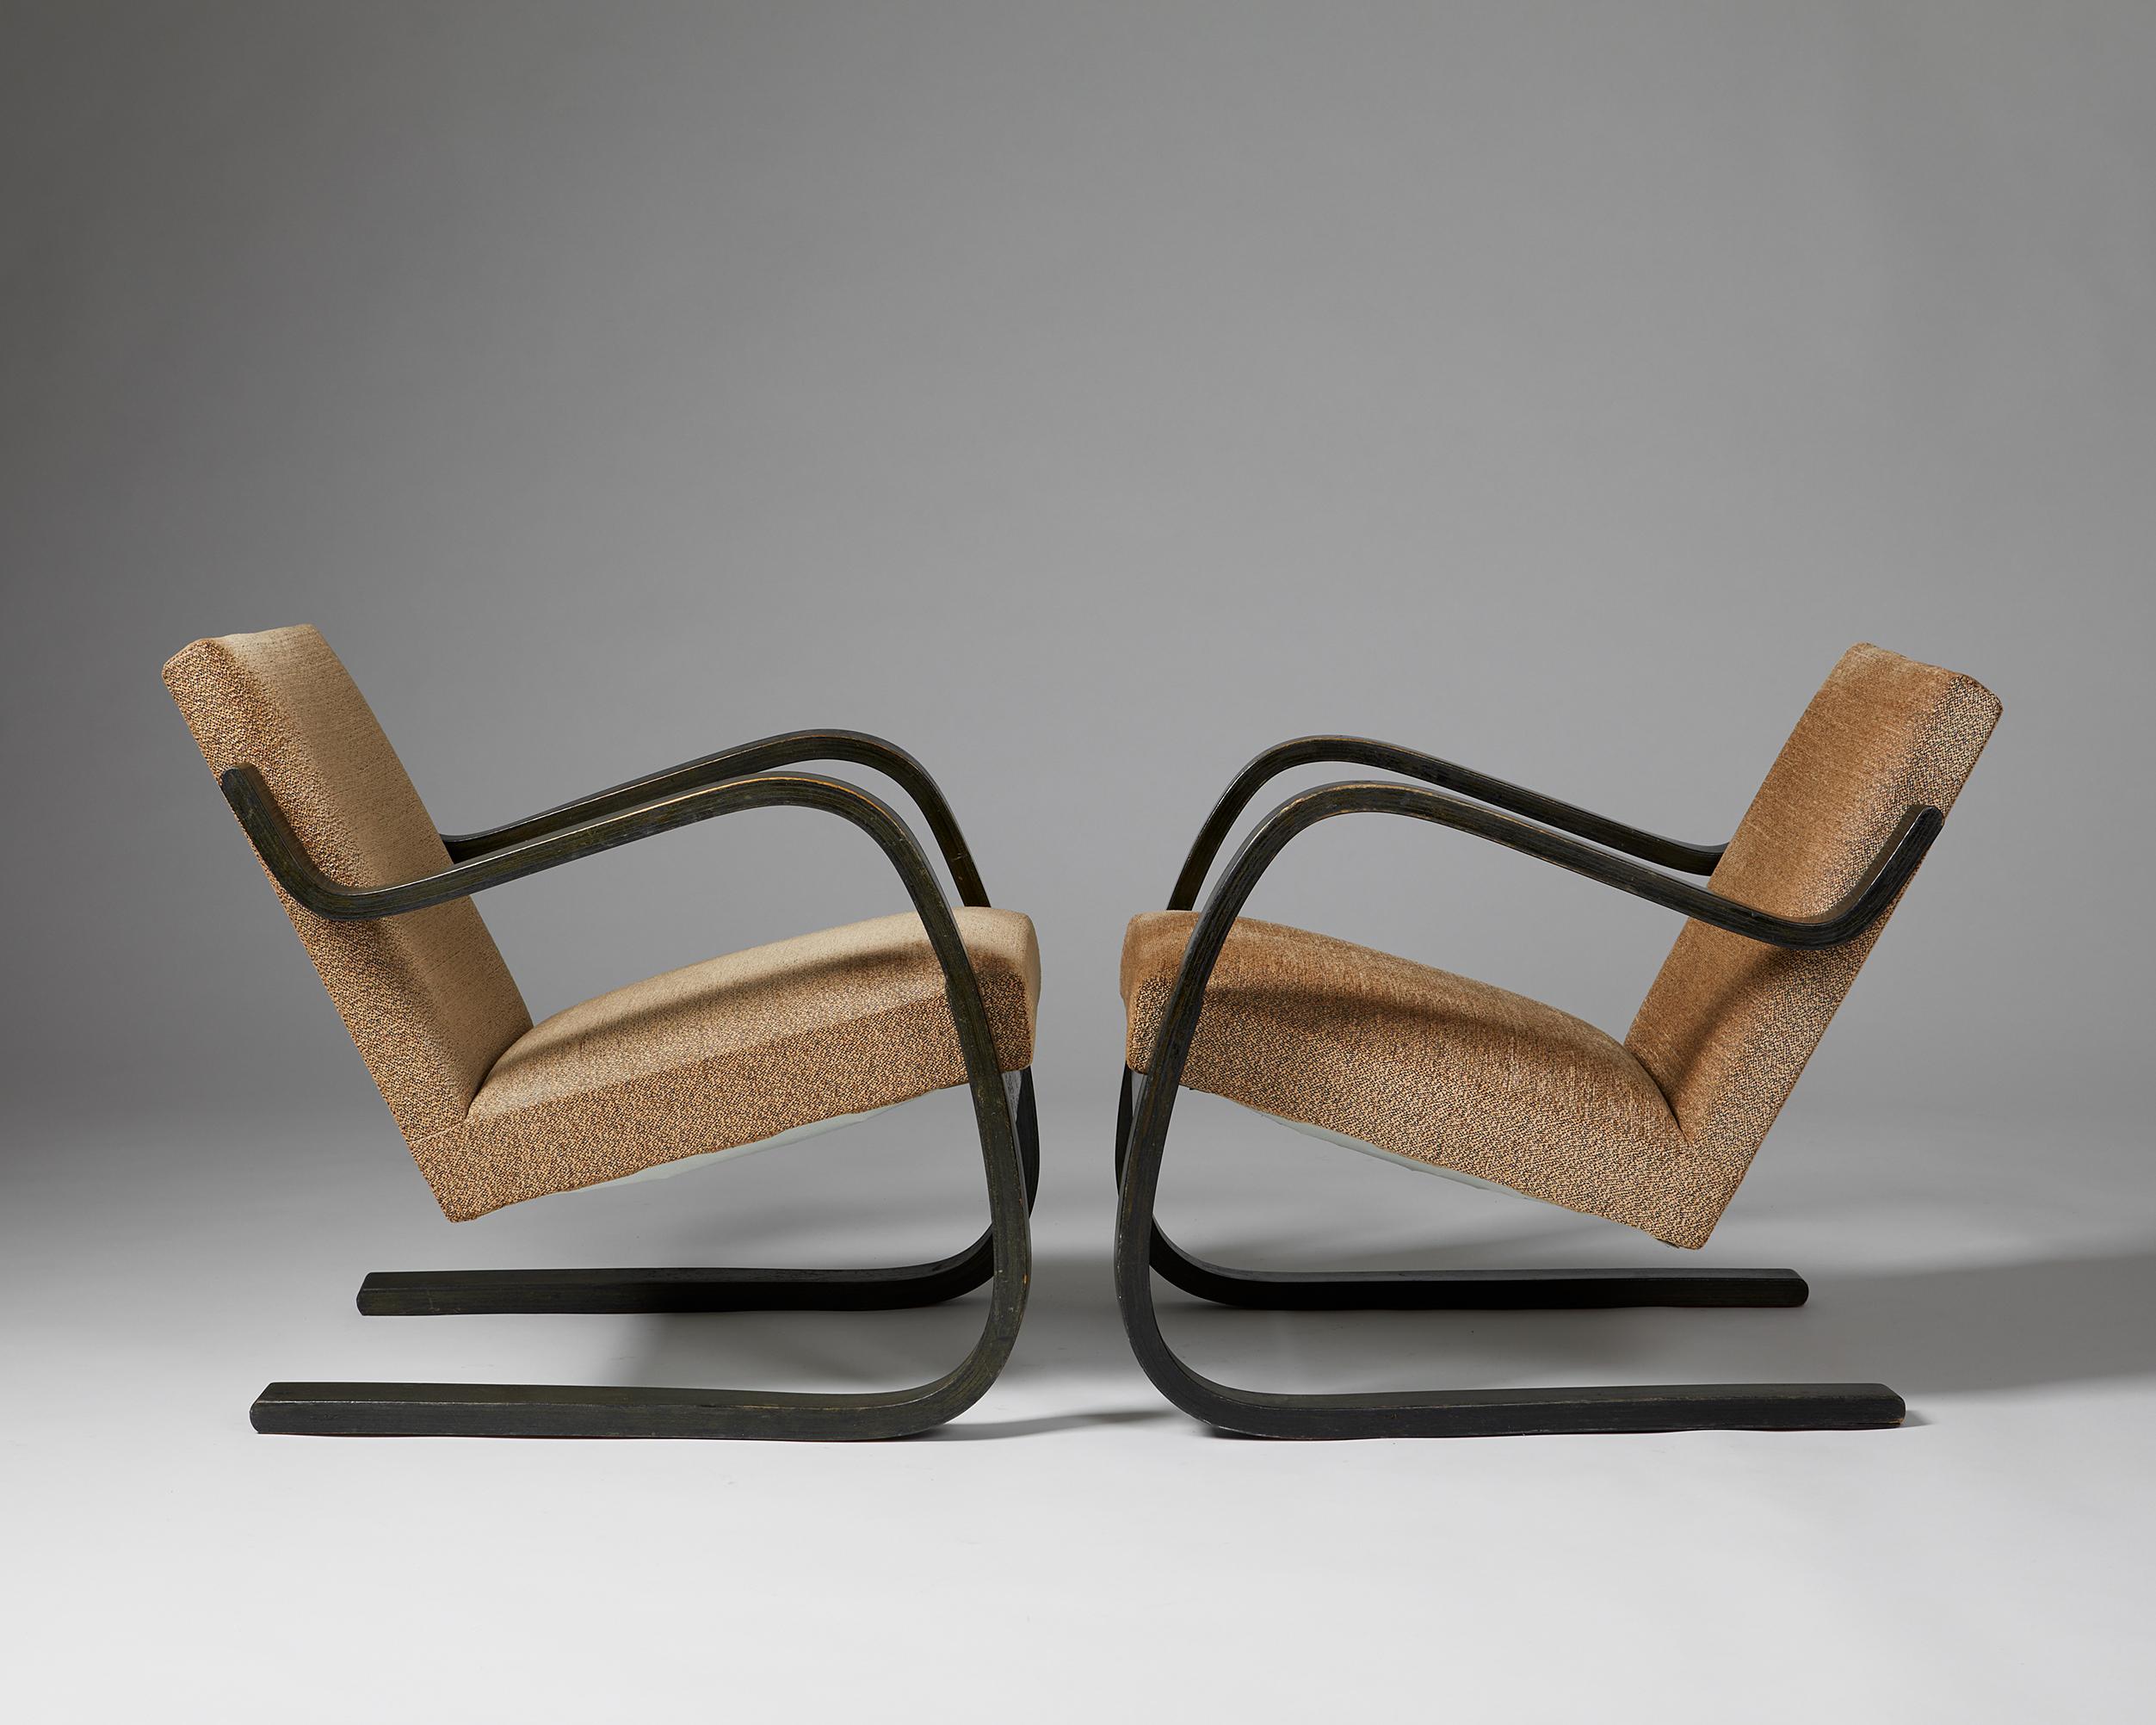 20th Century Pair of Chairs ‘Model 34’ Designed by Alvar Aalto for Artek, Finland, 1930's